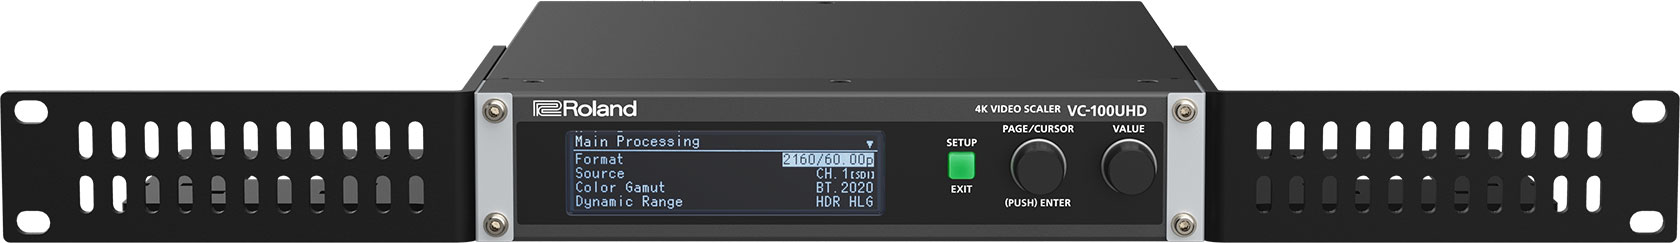 Roland VC-100UHD - 4K Video Scaler